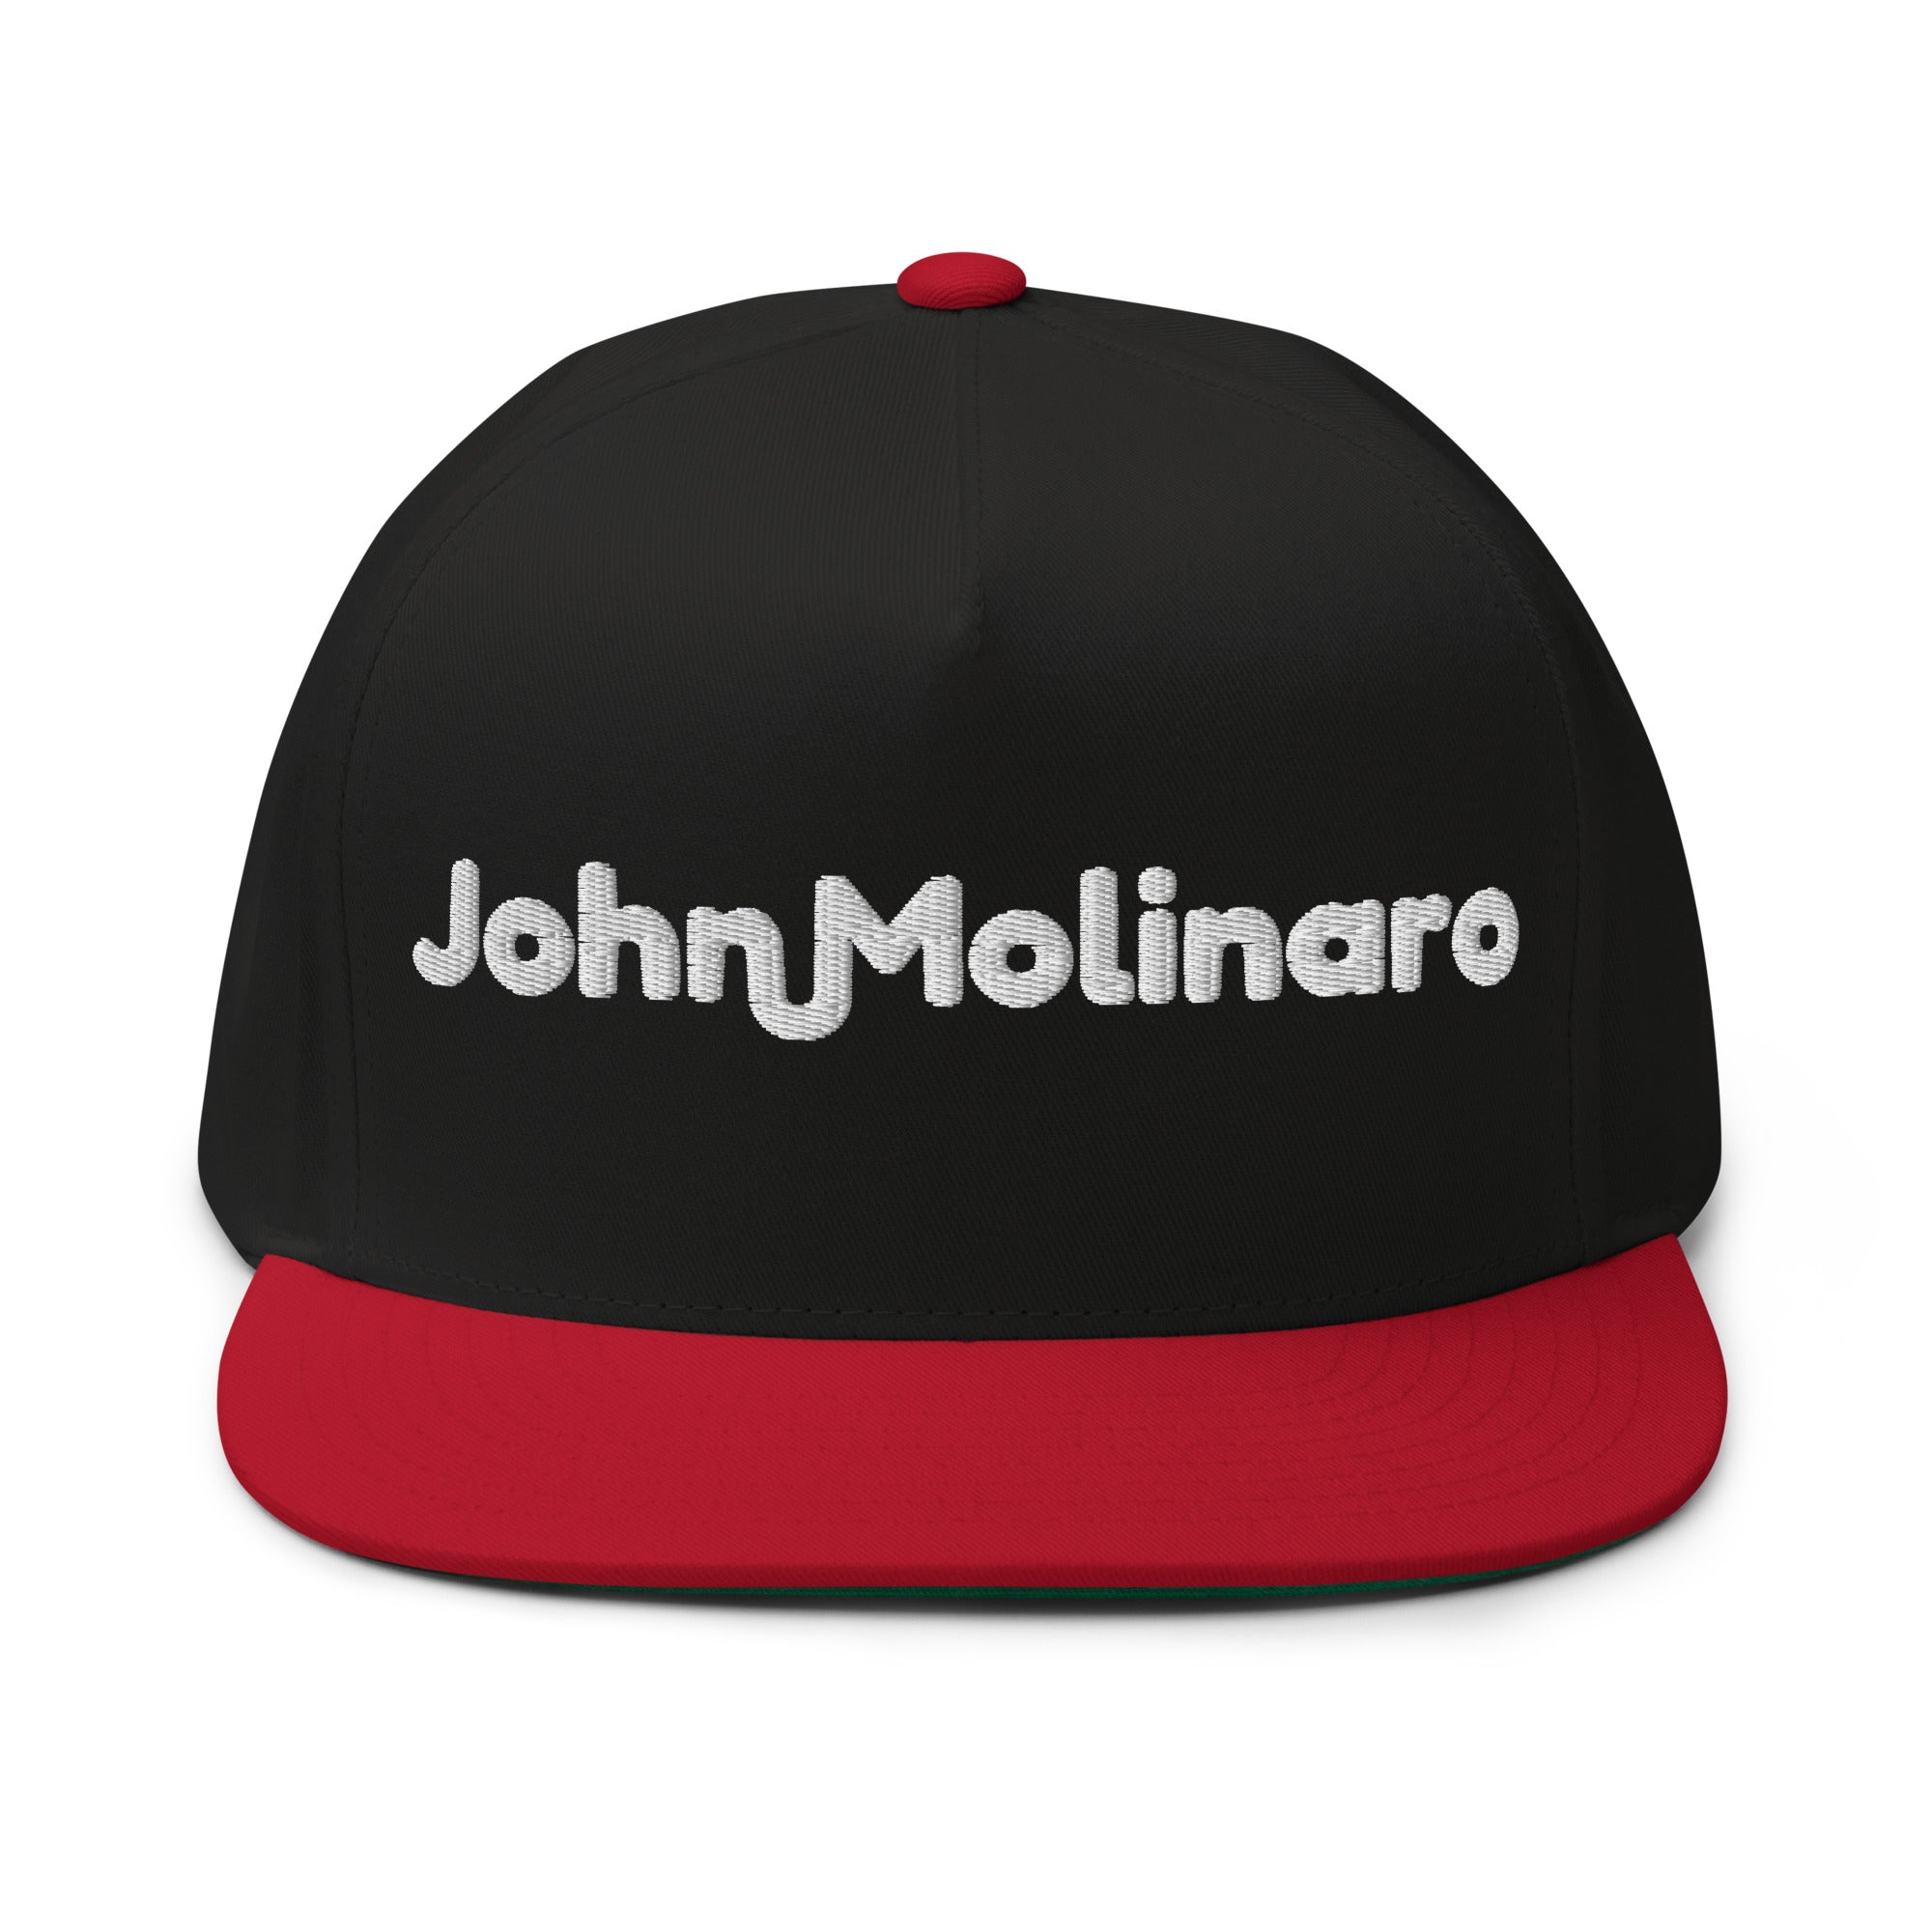 John Molinaro - Cap